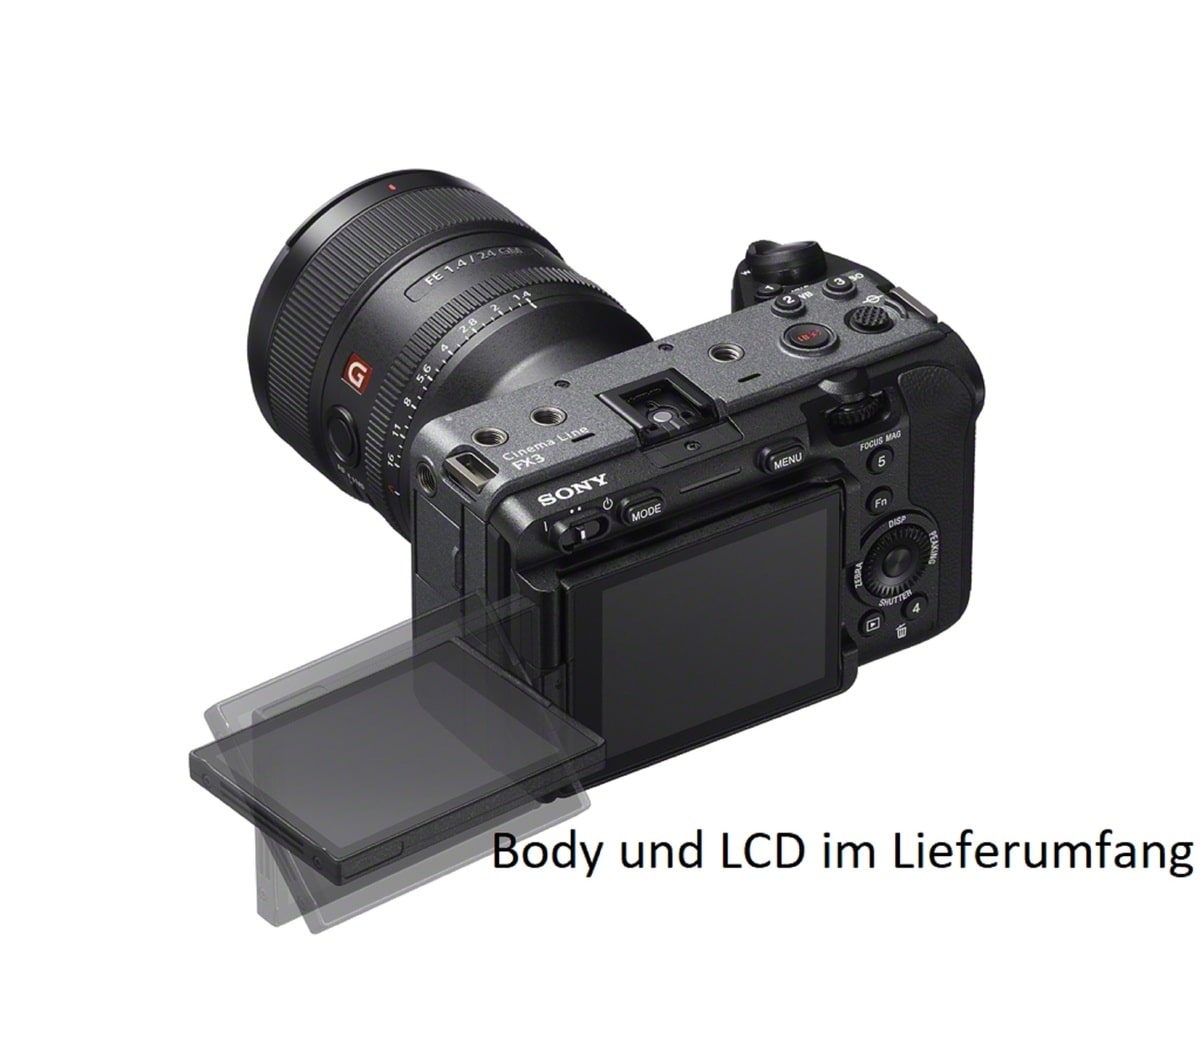 Sony Alpha ILME-FX3 Gehäuse - Vollformat Cinema Line Kamera